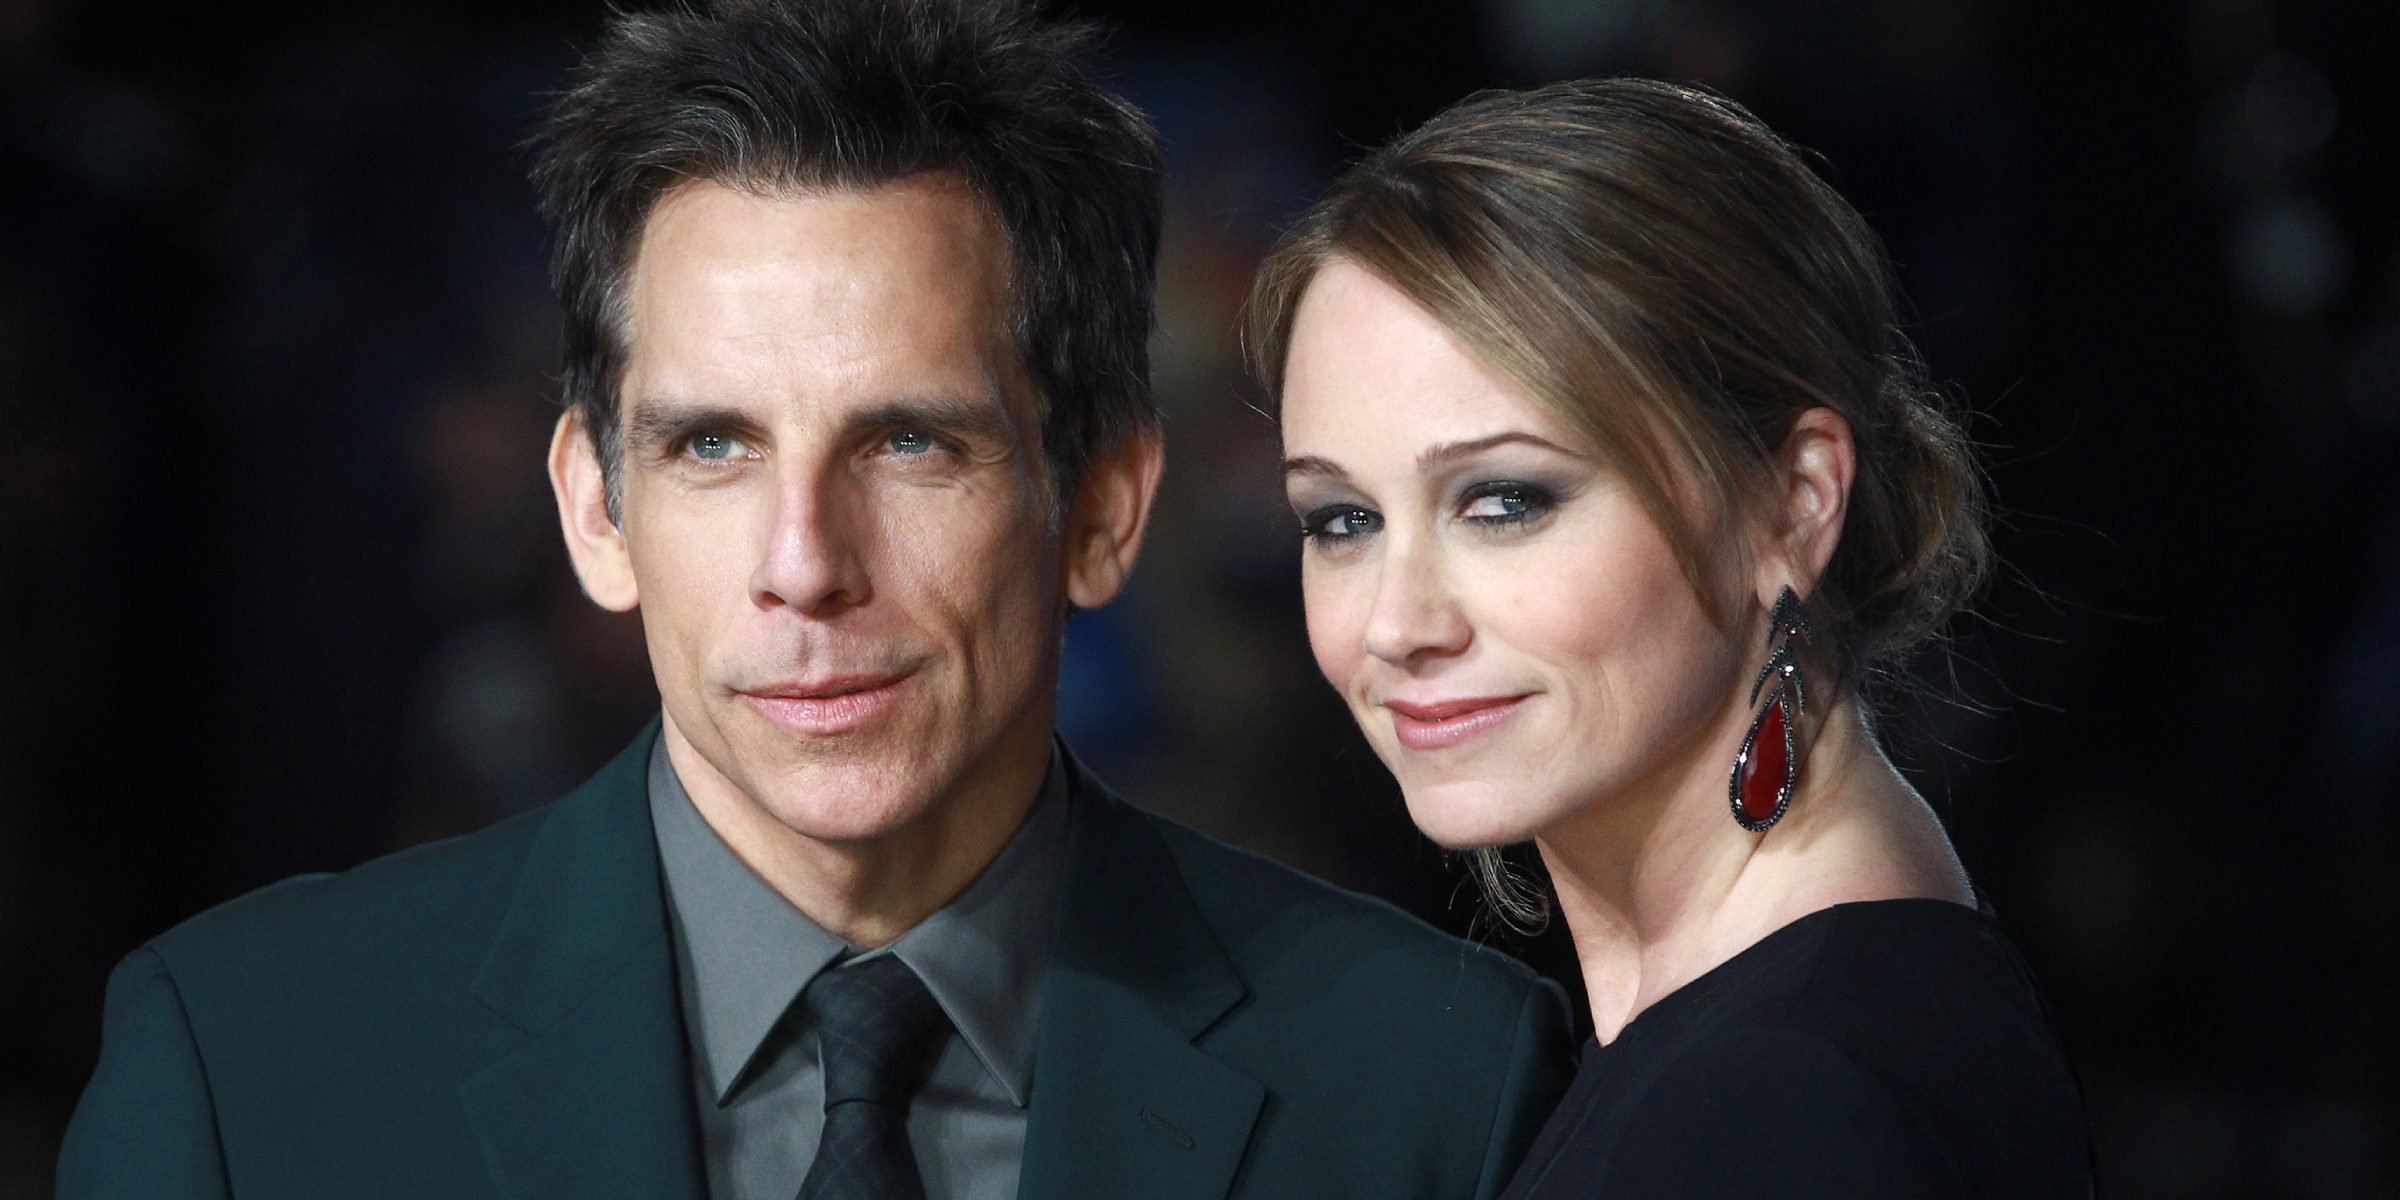 Ben Stiller and Christine Taylor, 2014 | Source: Getty Images